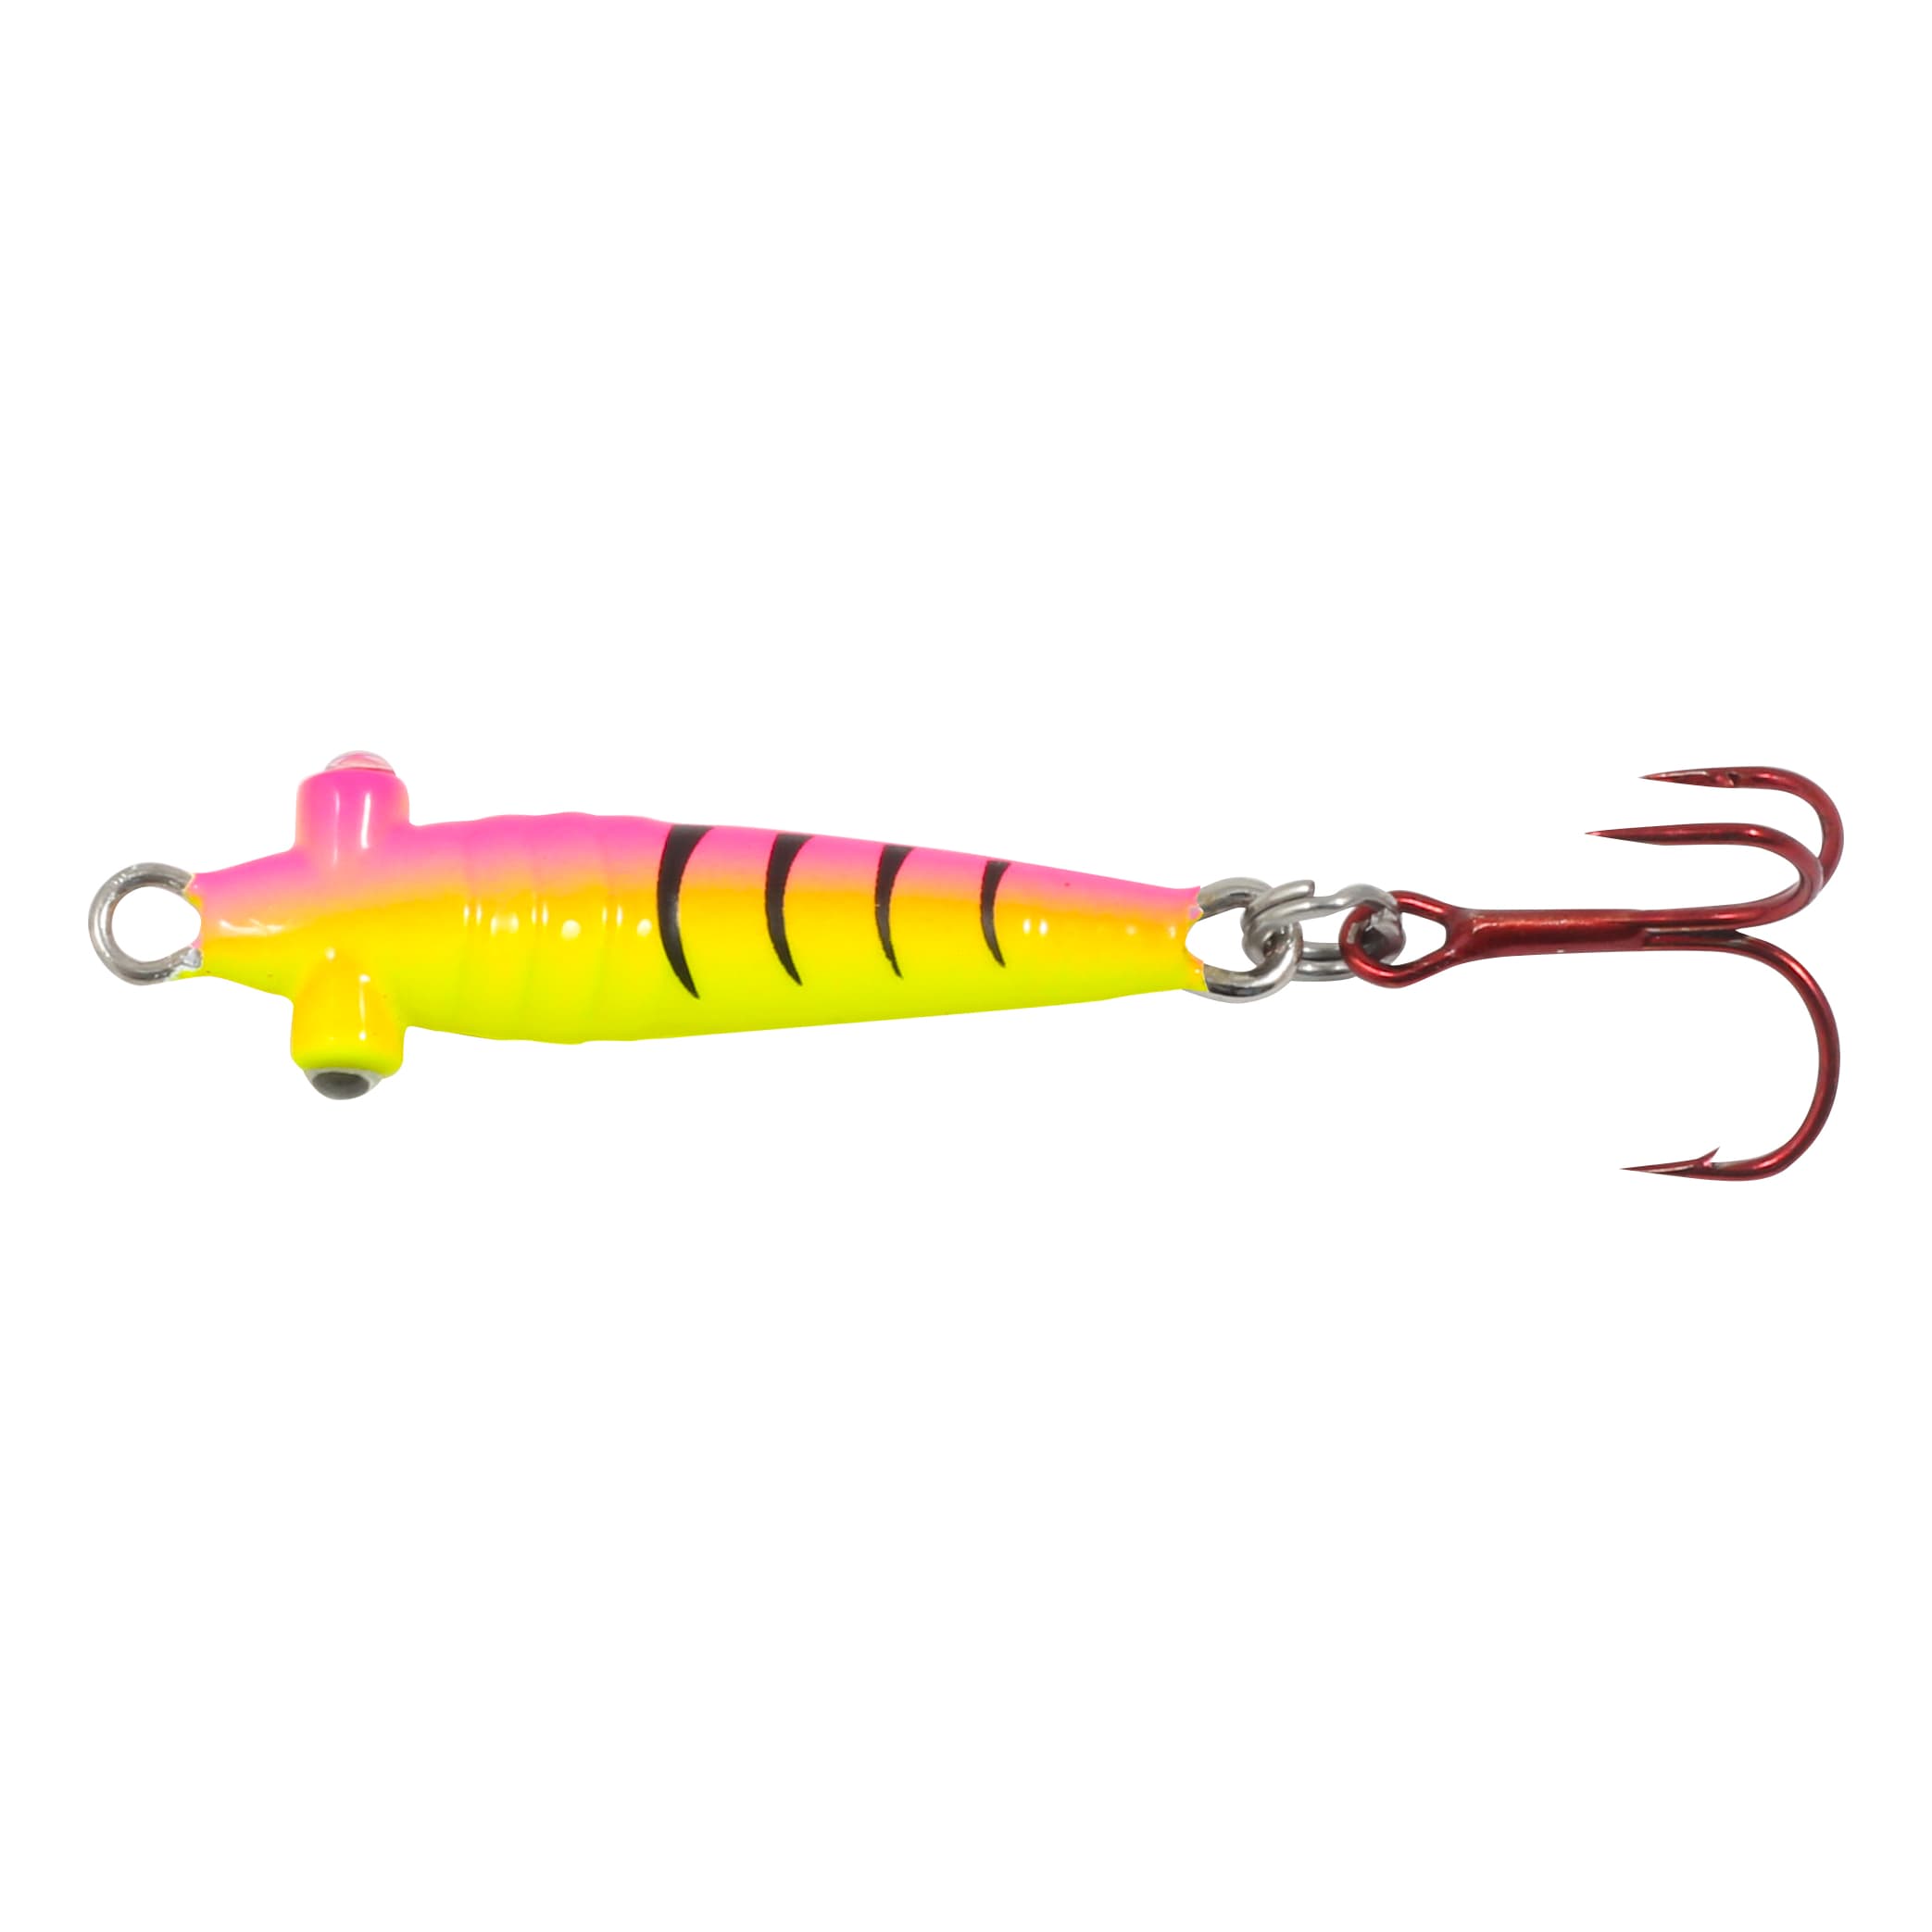 Clam Tikka Flash 3/32 oz - Glow Parrot - Ice Fishing Lure - Mini